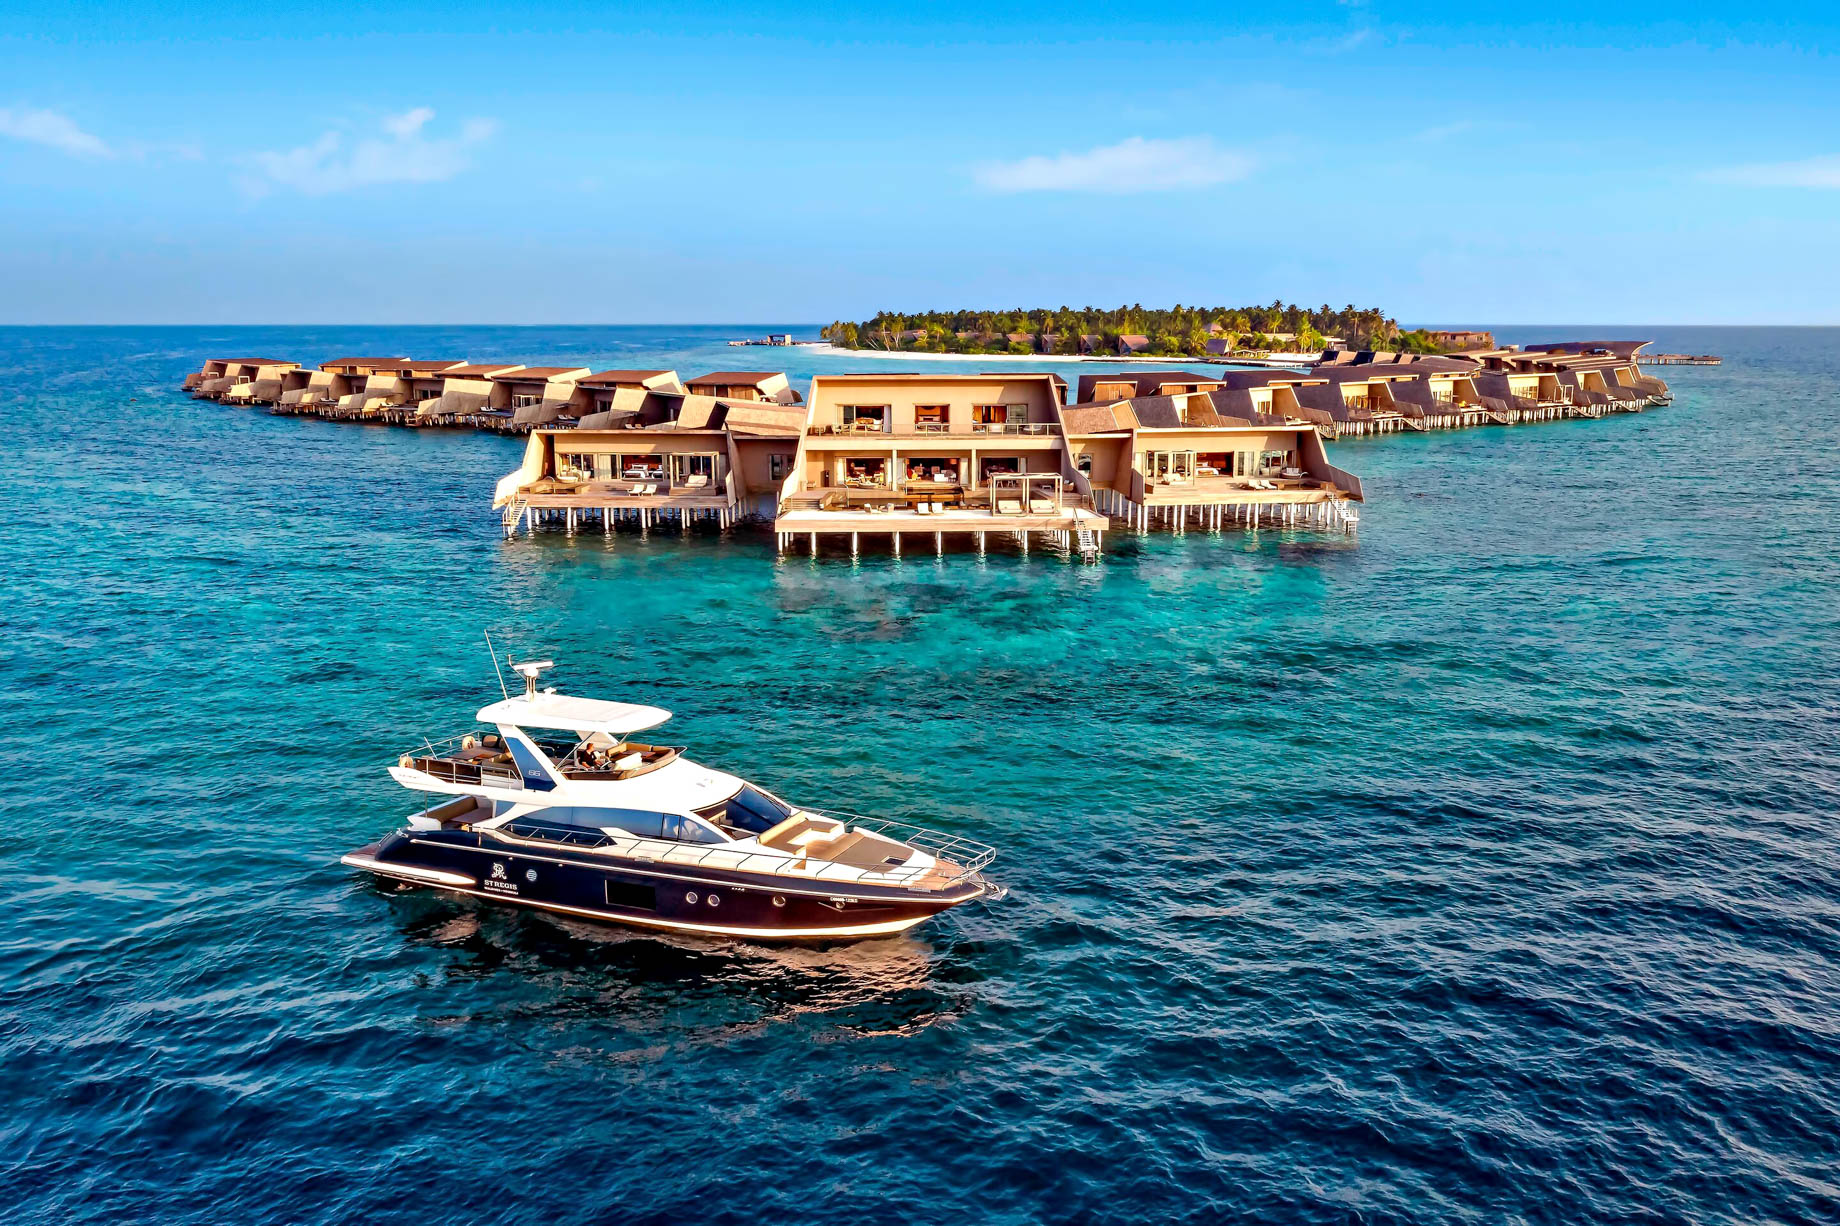 The St. Regis Maldives Vommuli Resort - Dhaalu Atoll, Maldives - Norma and John Jacob Astor Estate